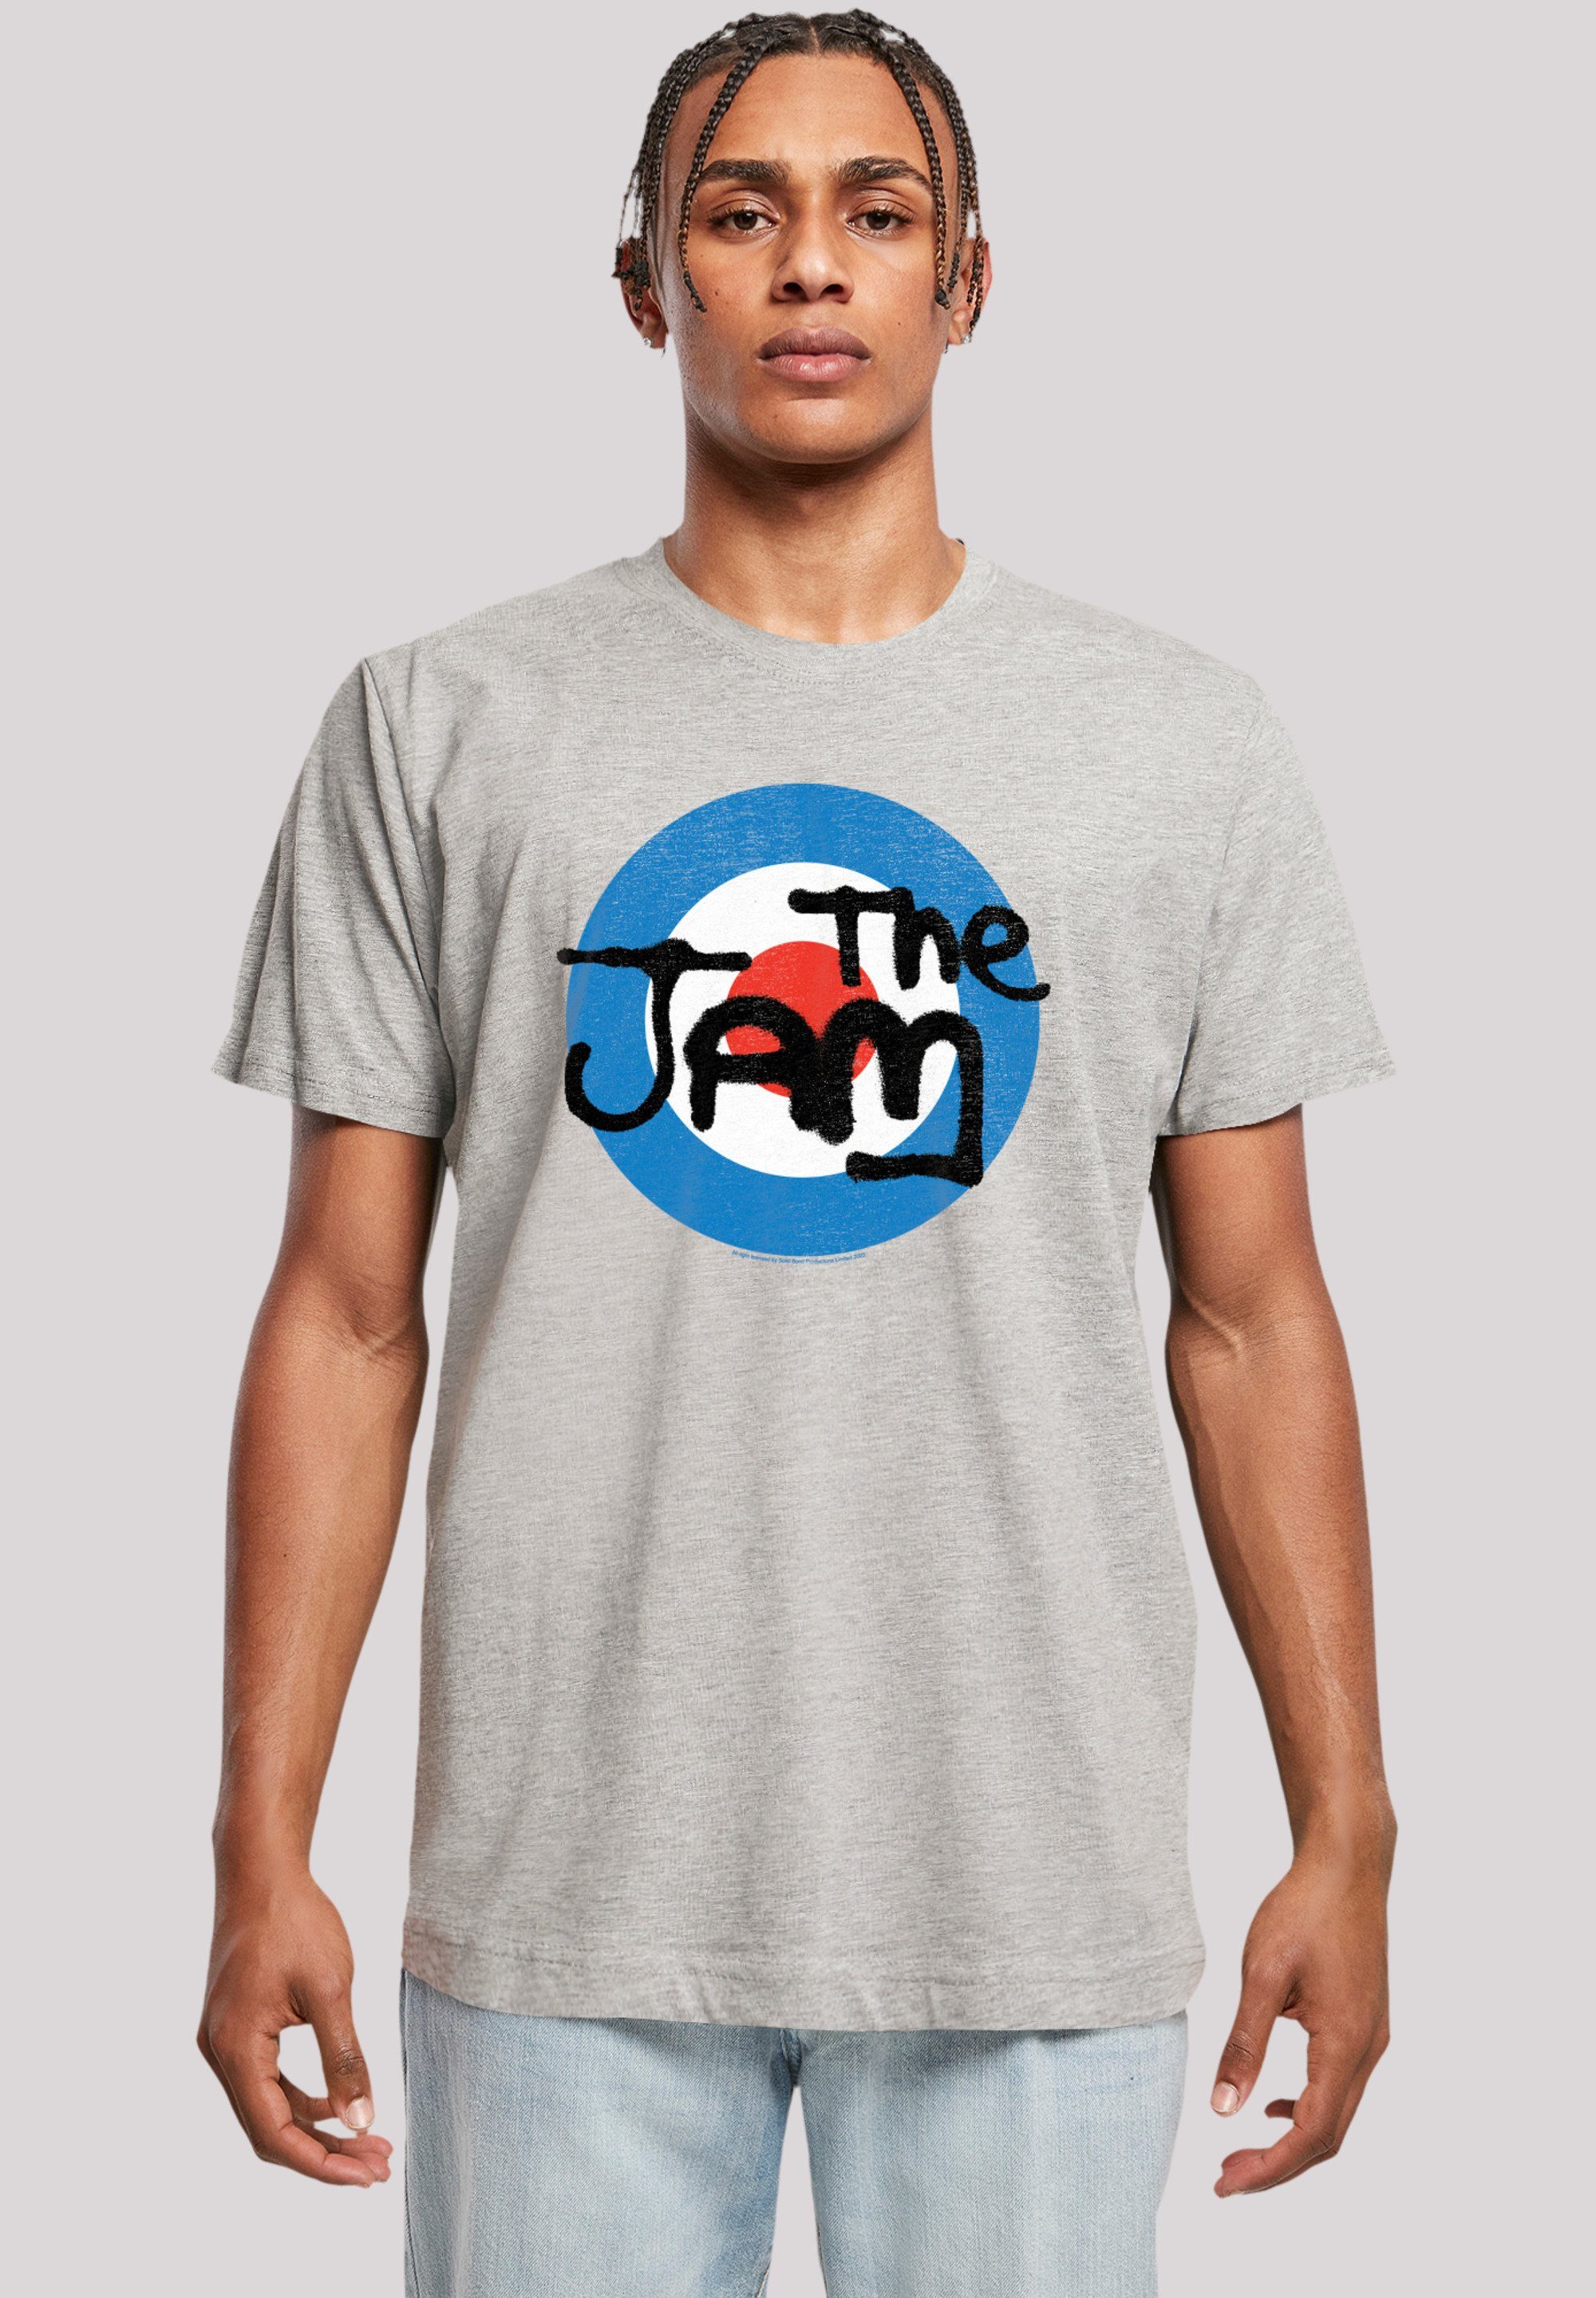 The Classic Jam T-Shirt Premium Logo Rippbündchen Hals Doppelnähte am am Saum F4NT4STIC Band Qualität, und